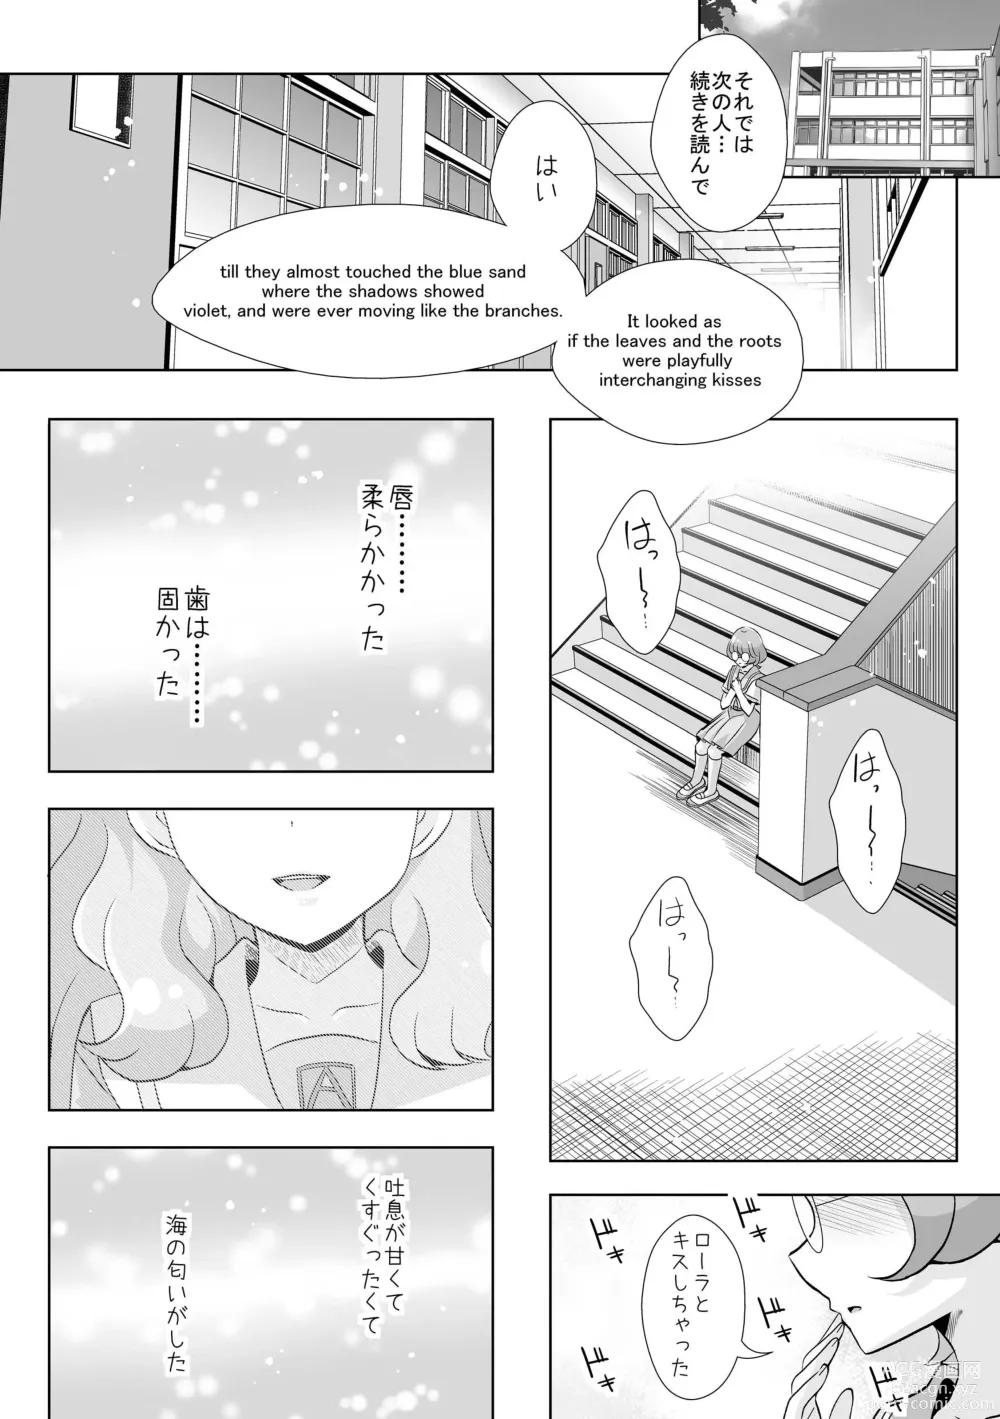 Page 5 of doujinshi Ningyo Hime Ja I Rarenai.